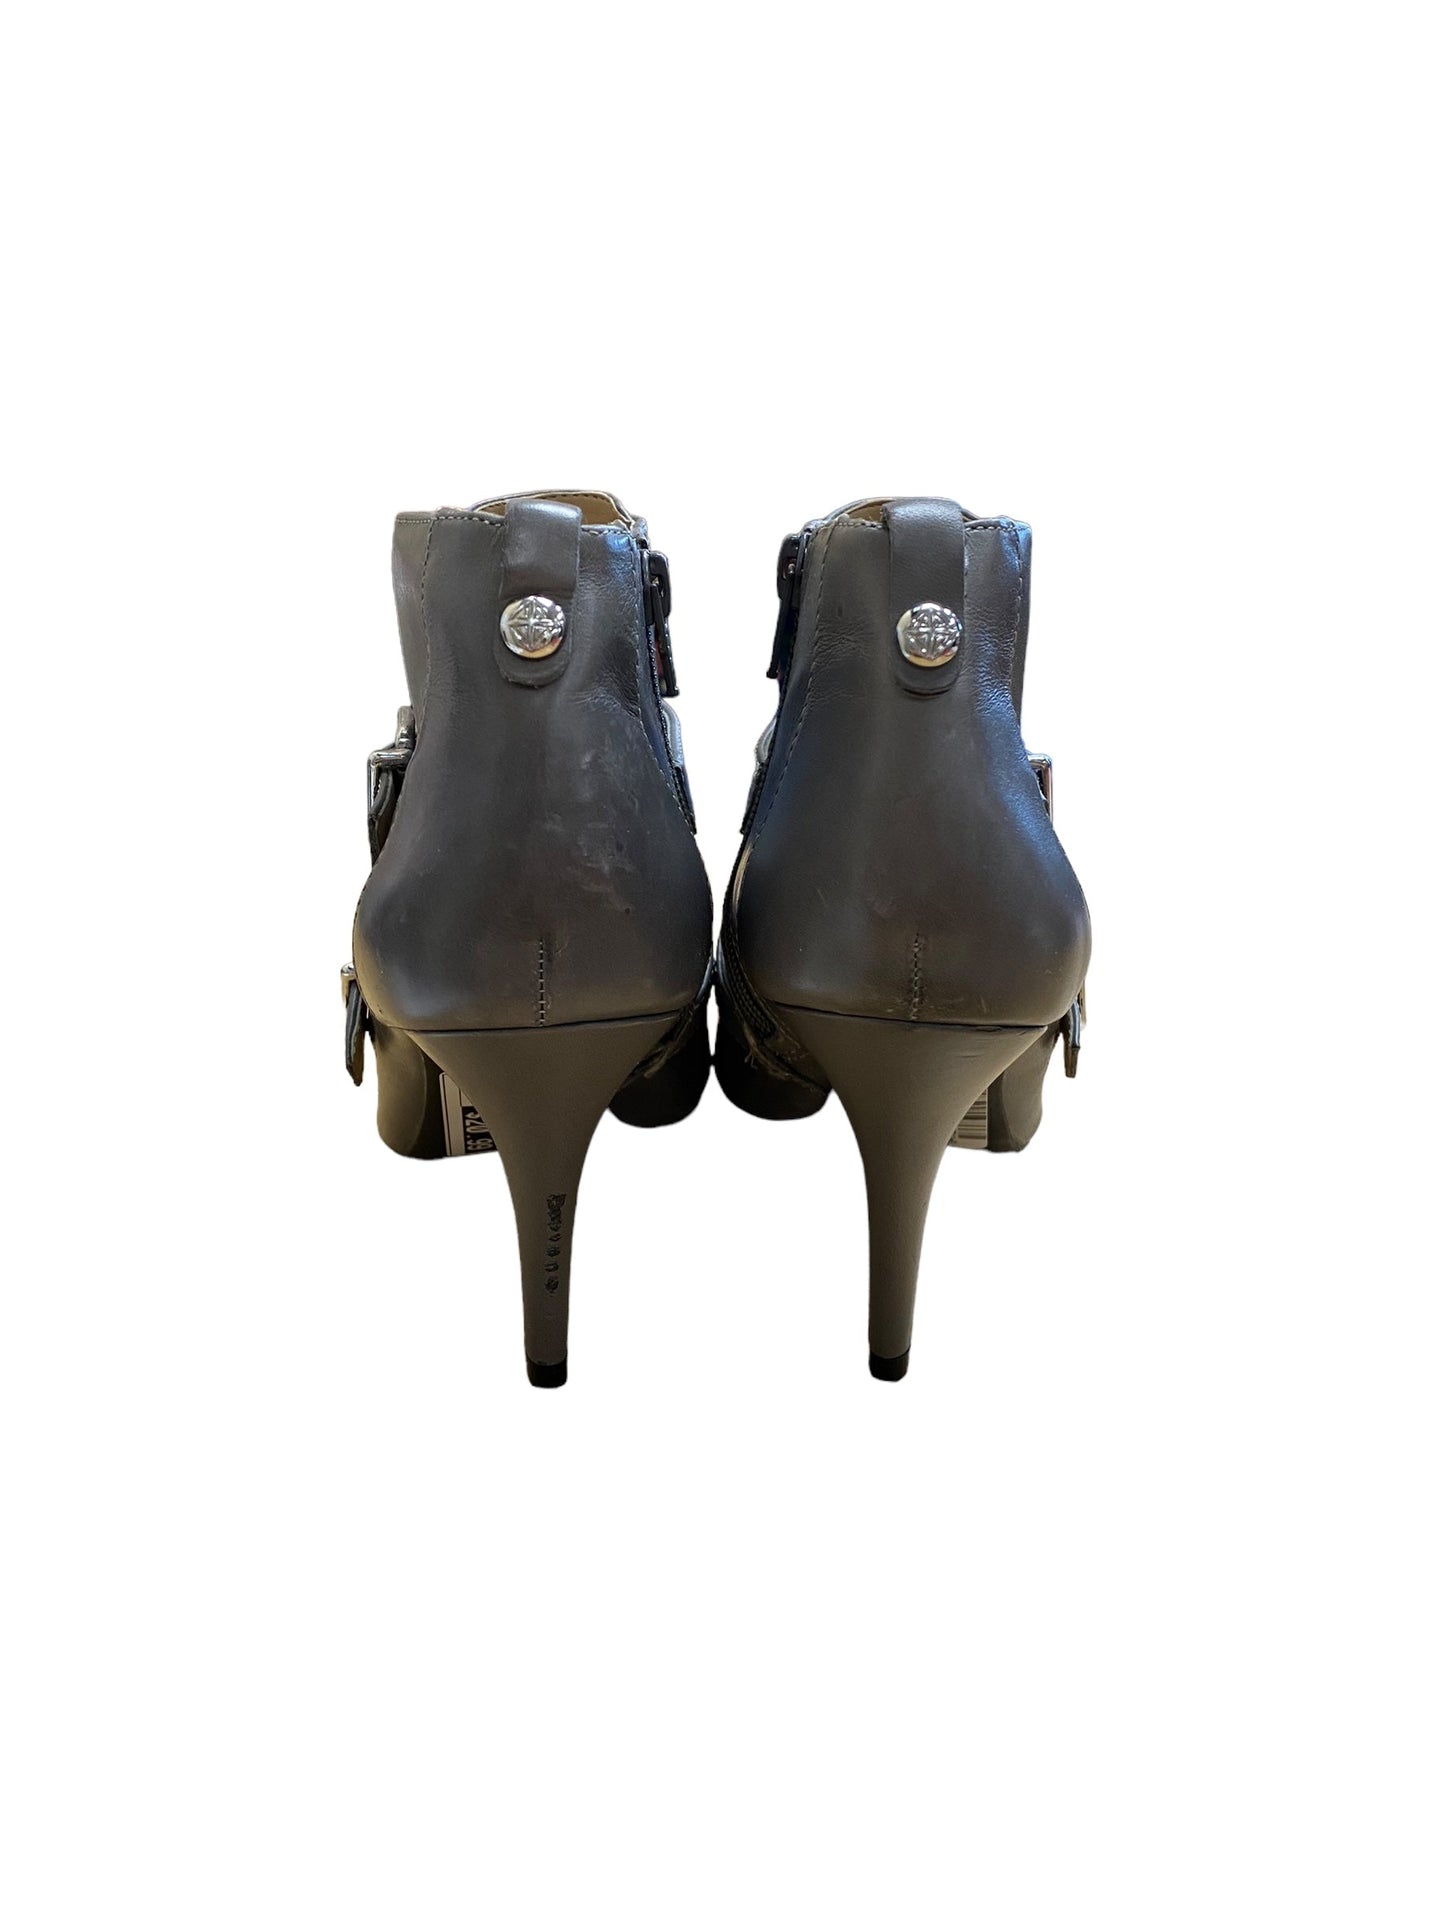 Shoes Heels Stiletto By Antonio Melani  Size: 7.5